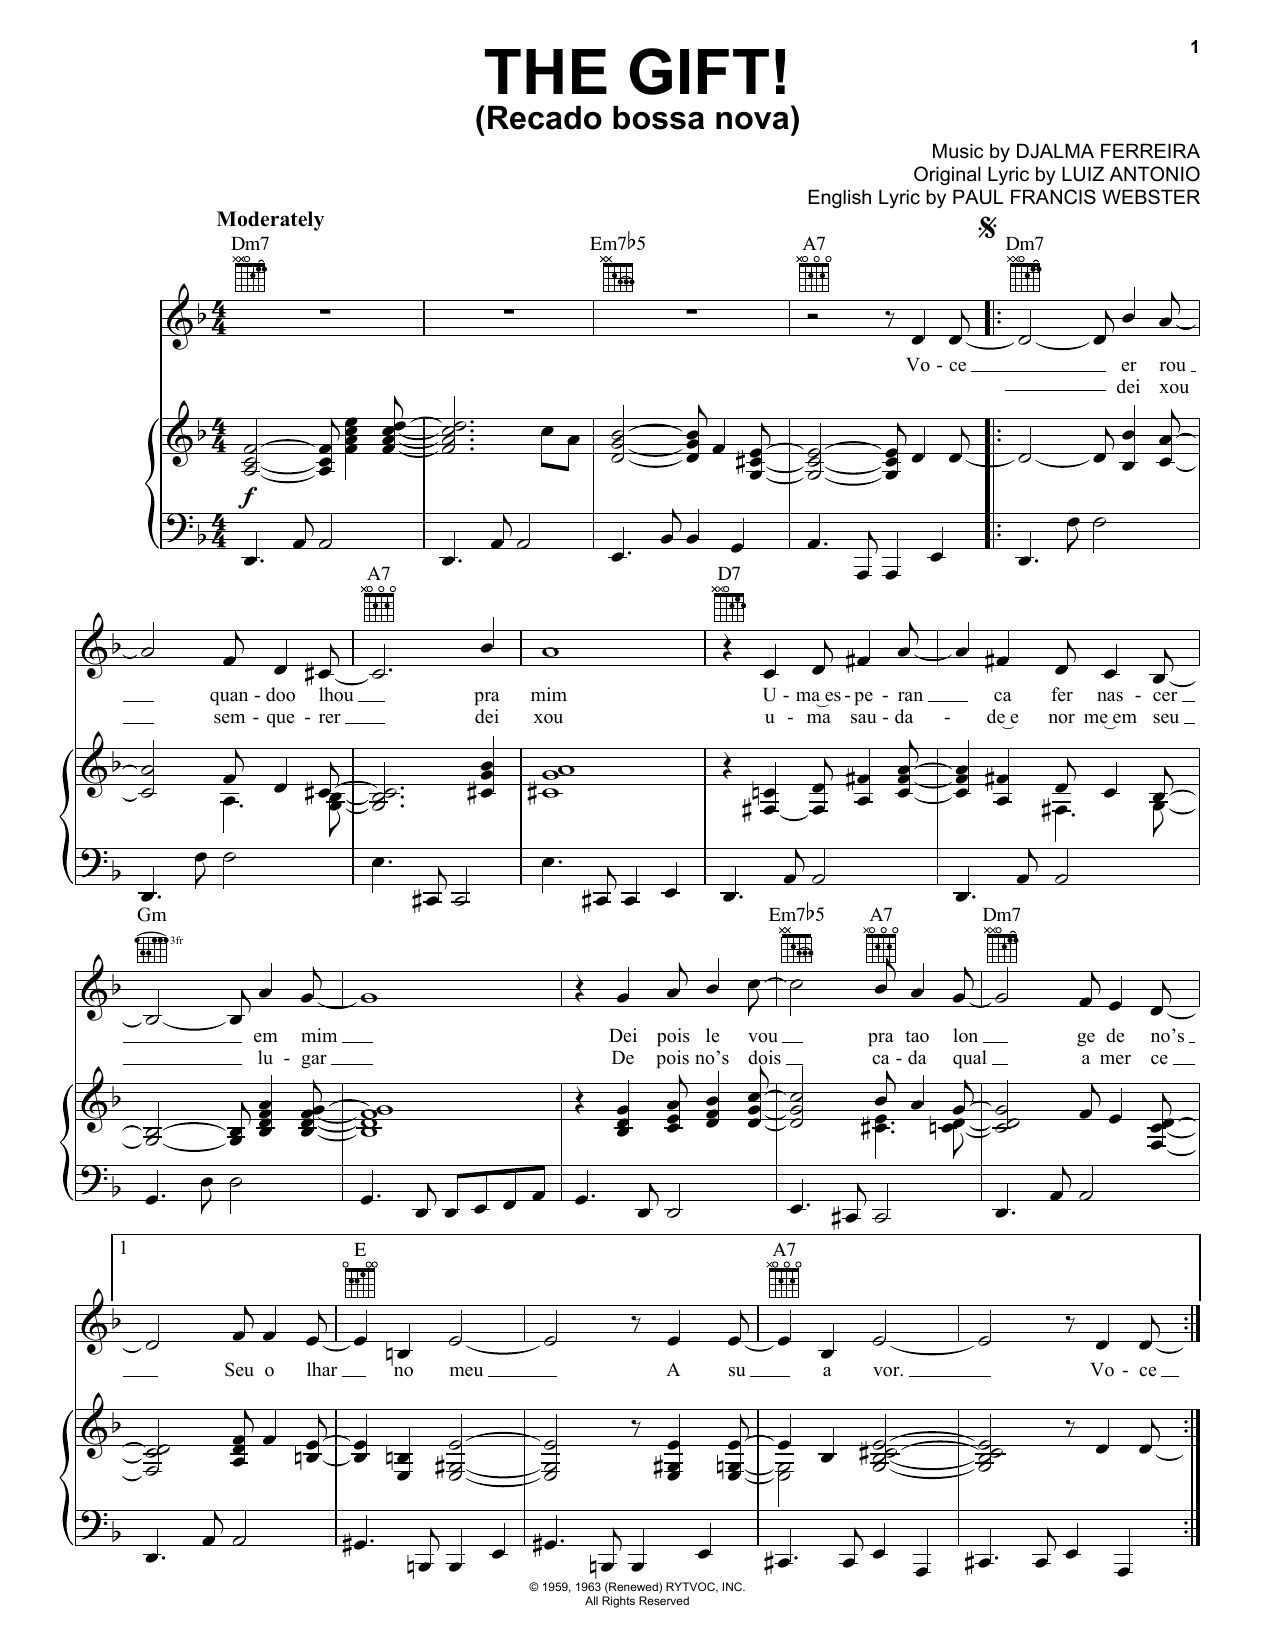 Download Luiz Antonio The Gift! (Recado Bossa Nova) Sheet Music and learn how to play Piano PDF digital score in minutes